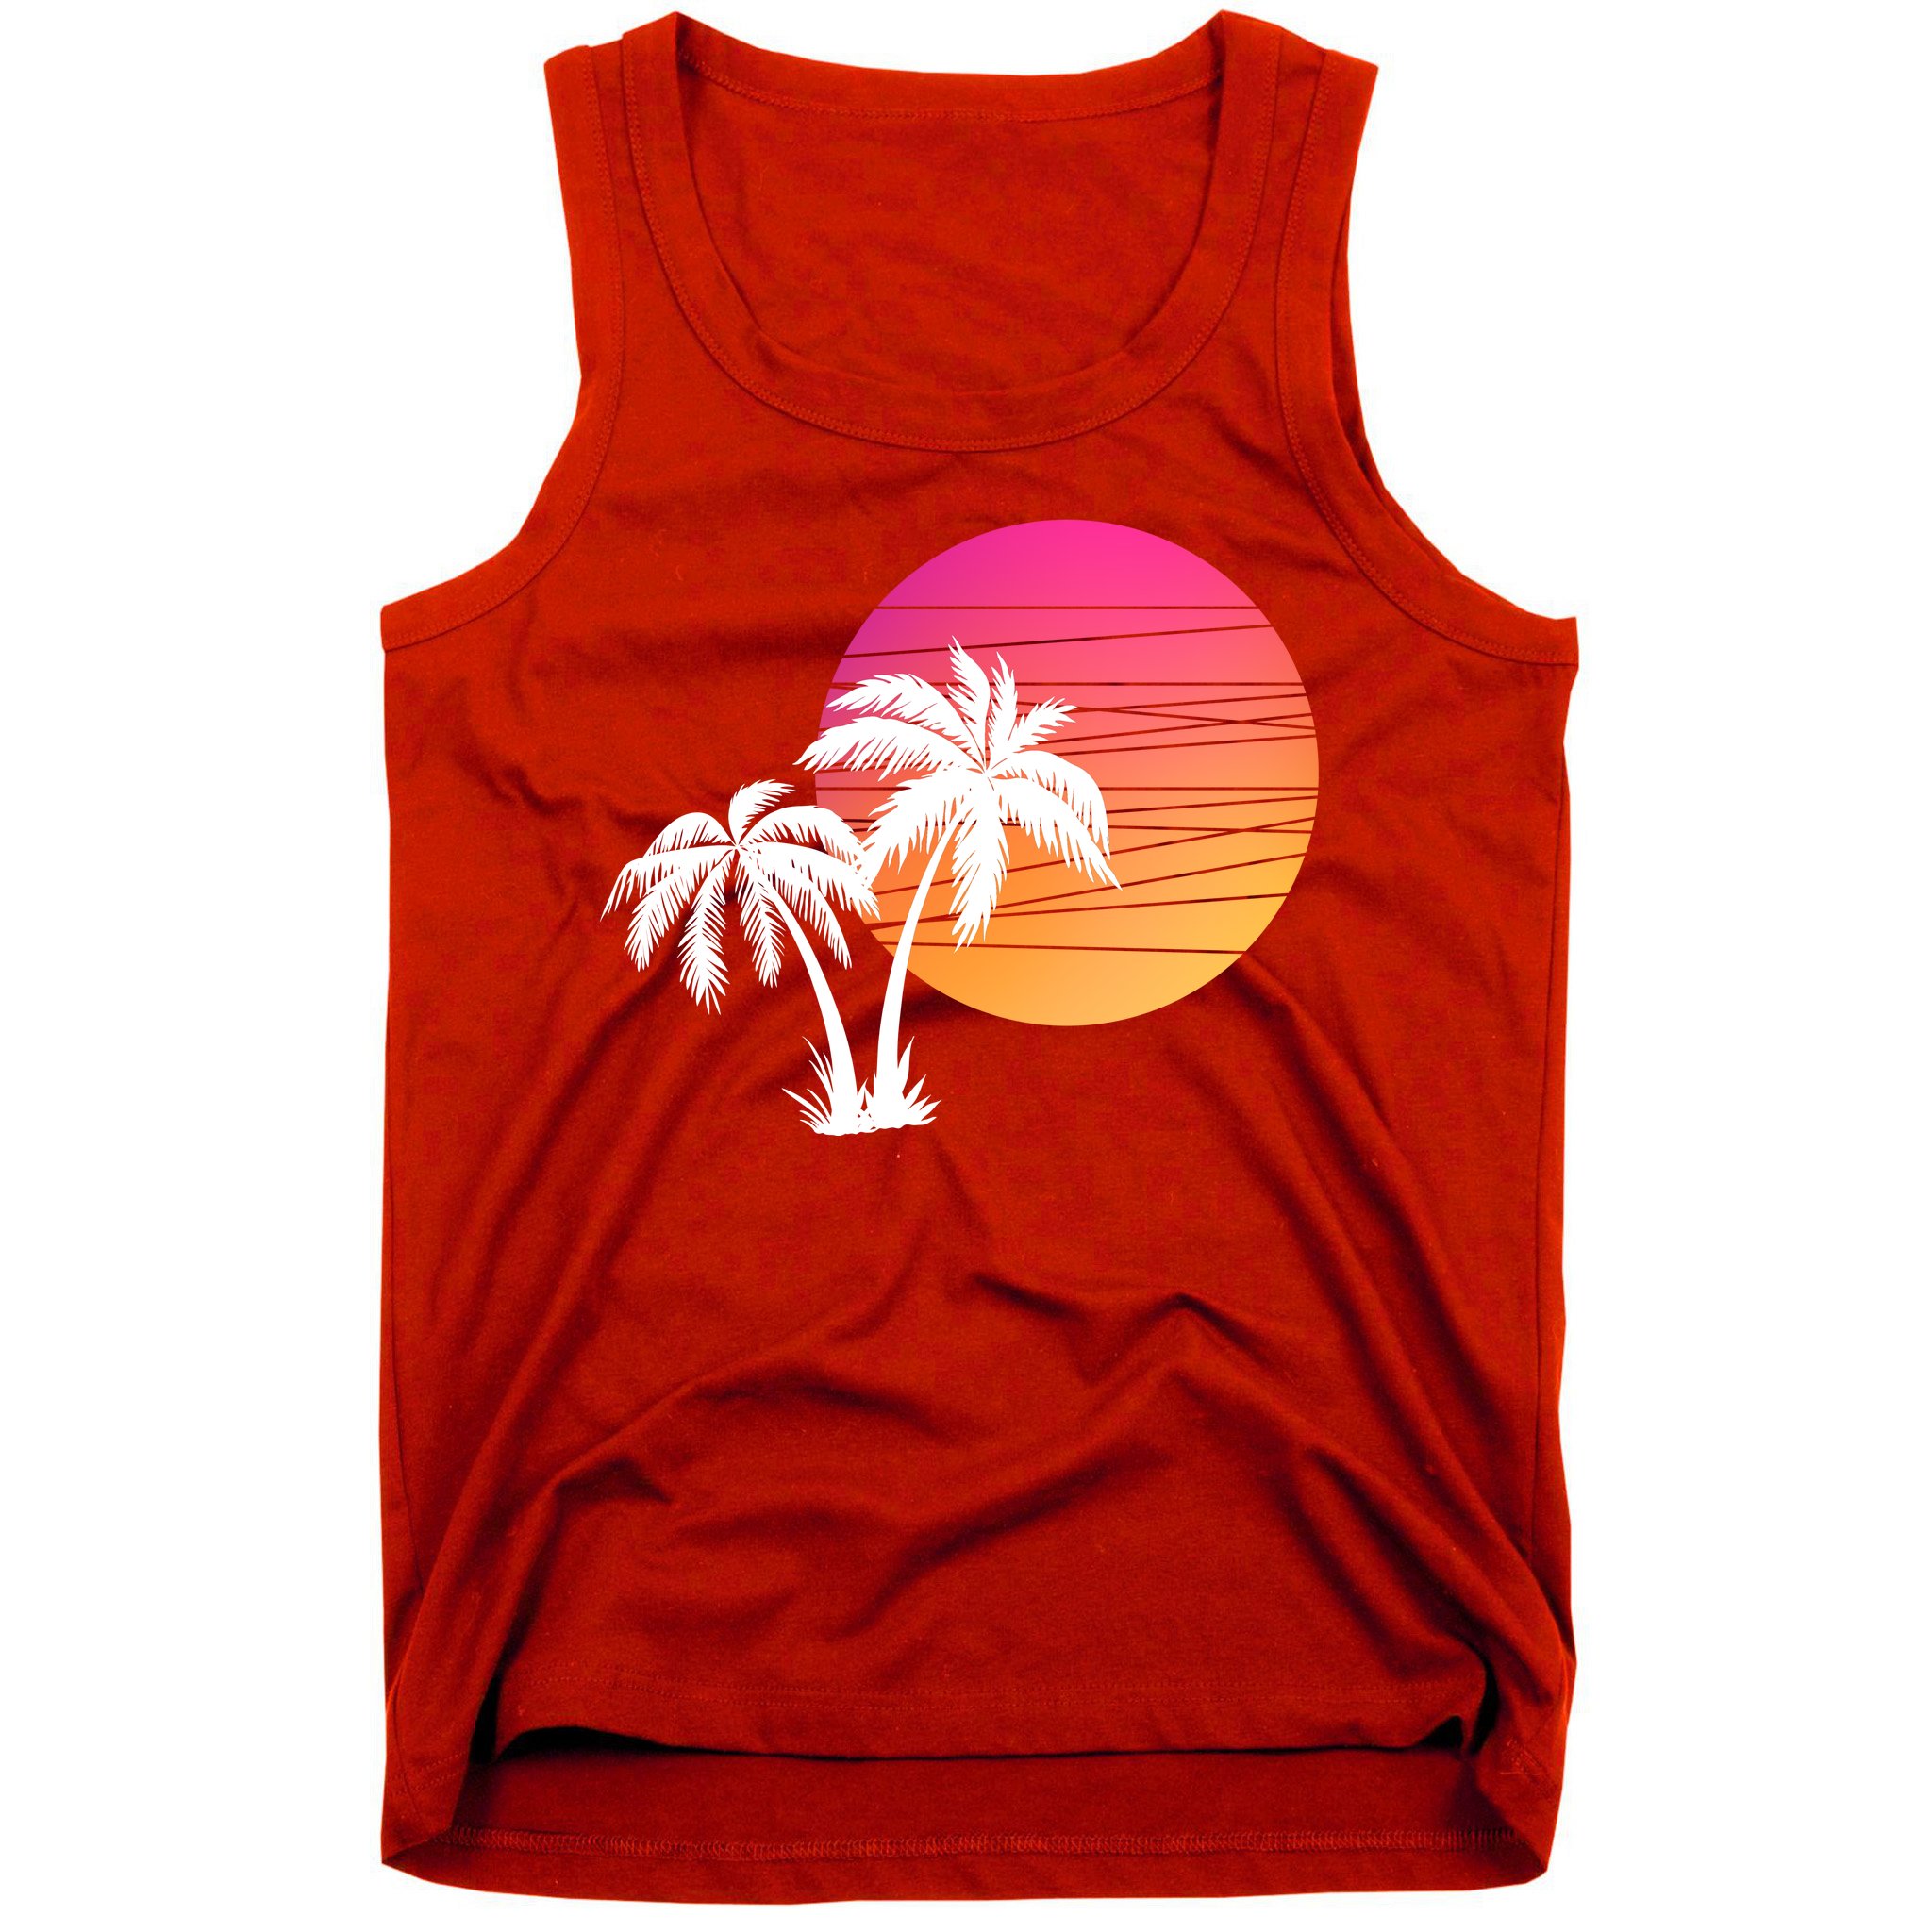 PALM TREE Baby Infant Tank Top T-shirt Summer Beach Vest Tee 6M,12M,18M,24M New 